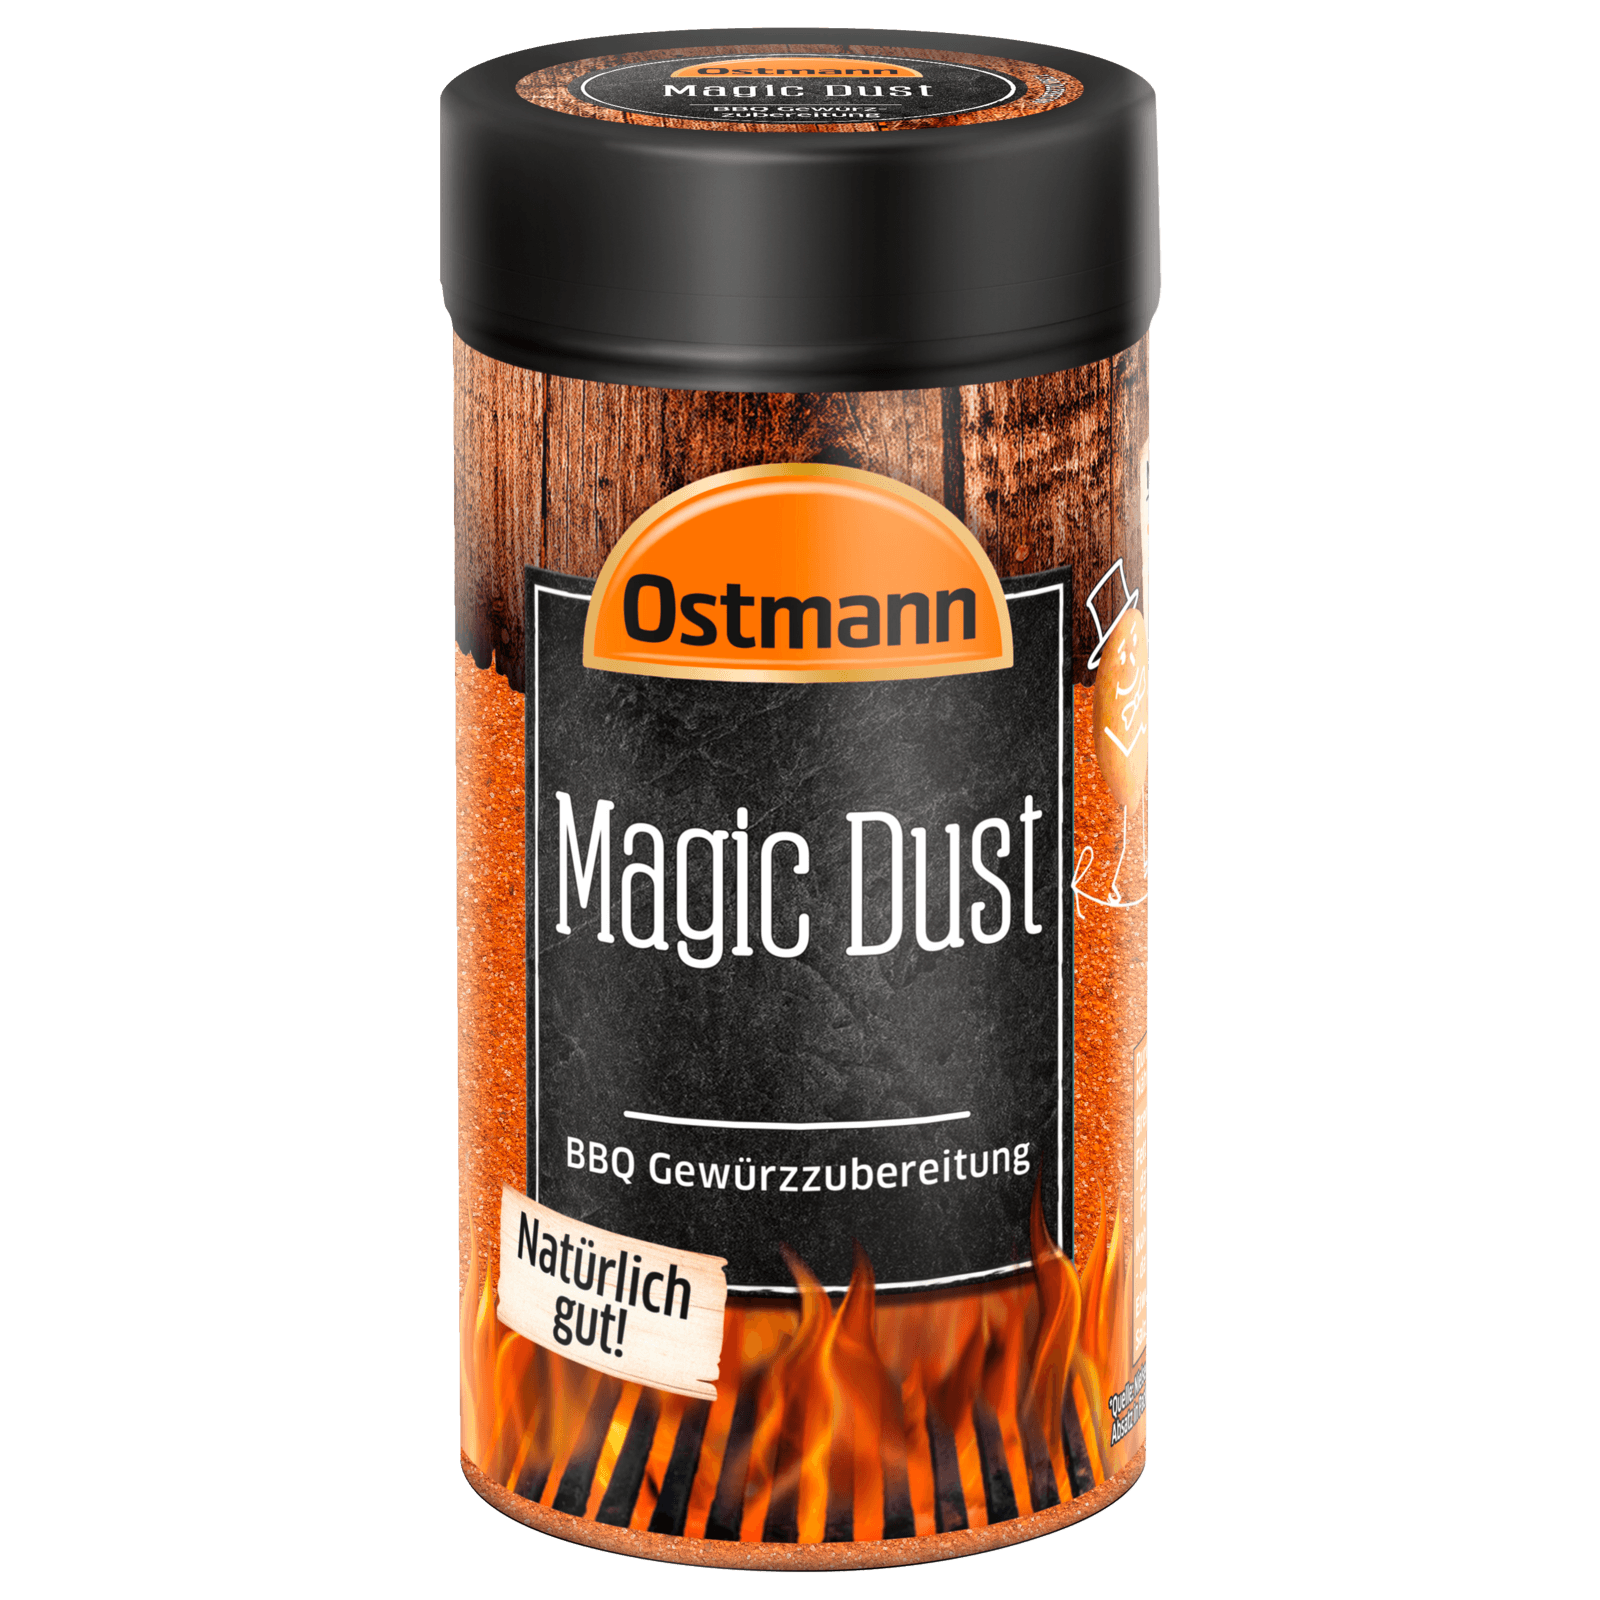 Ostmann Magic Dust BBQ Gewürzzubereitung 140g bei REWE online